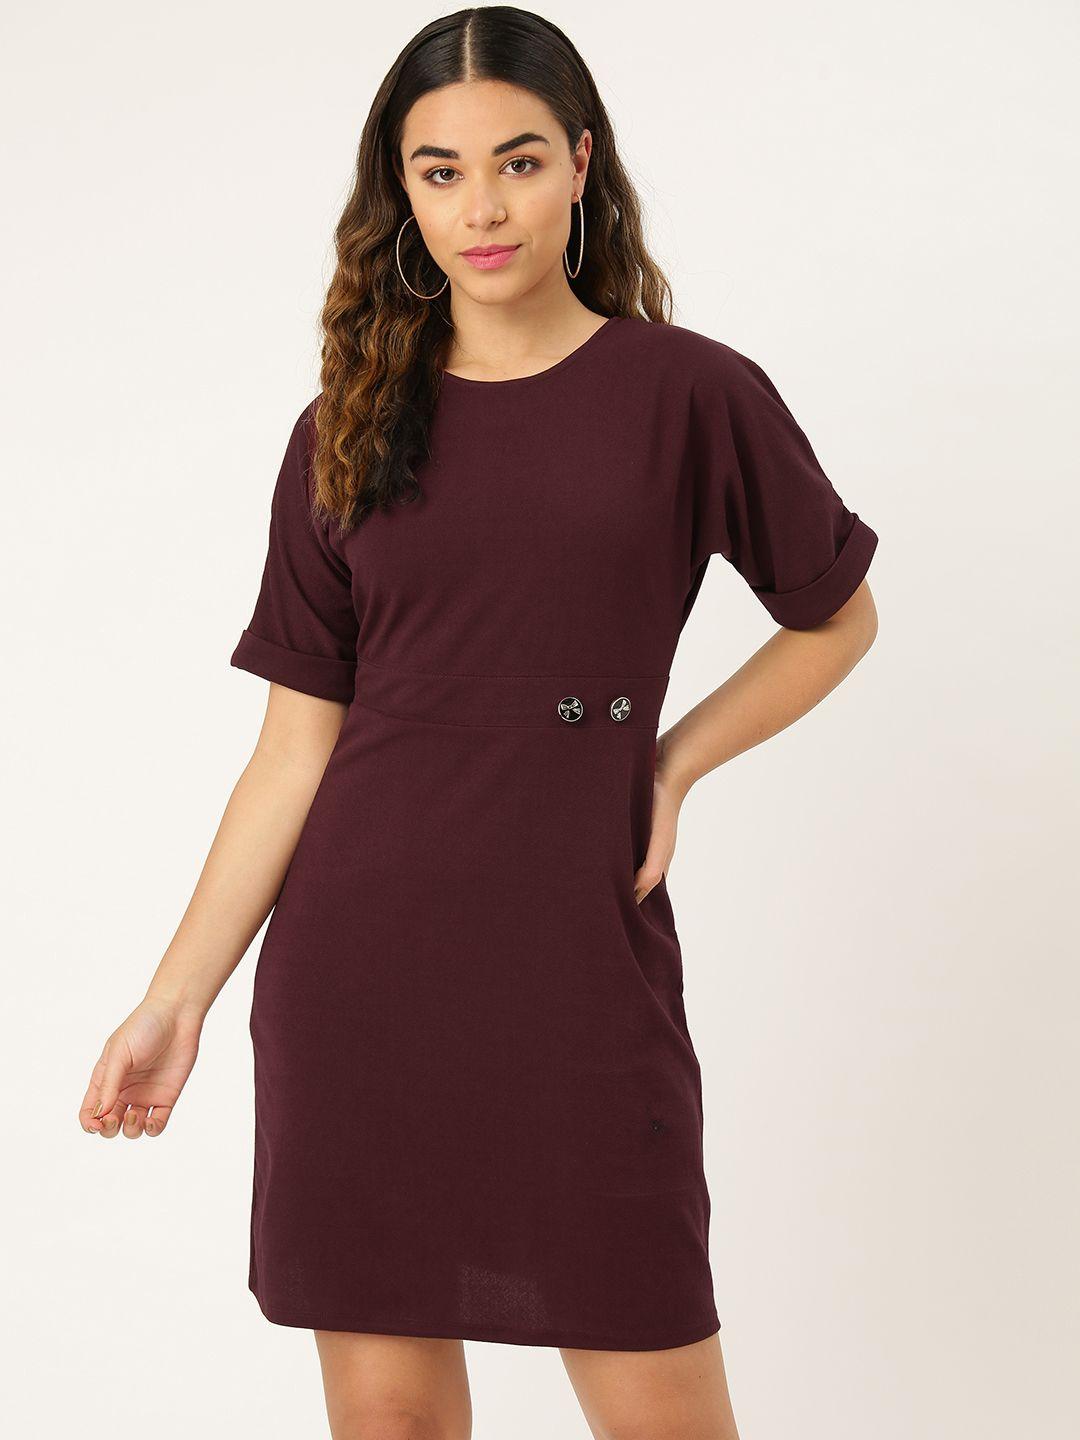 style-quotient-women-burgundy-solid-sheath-dress